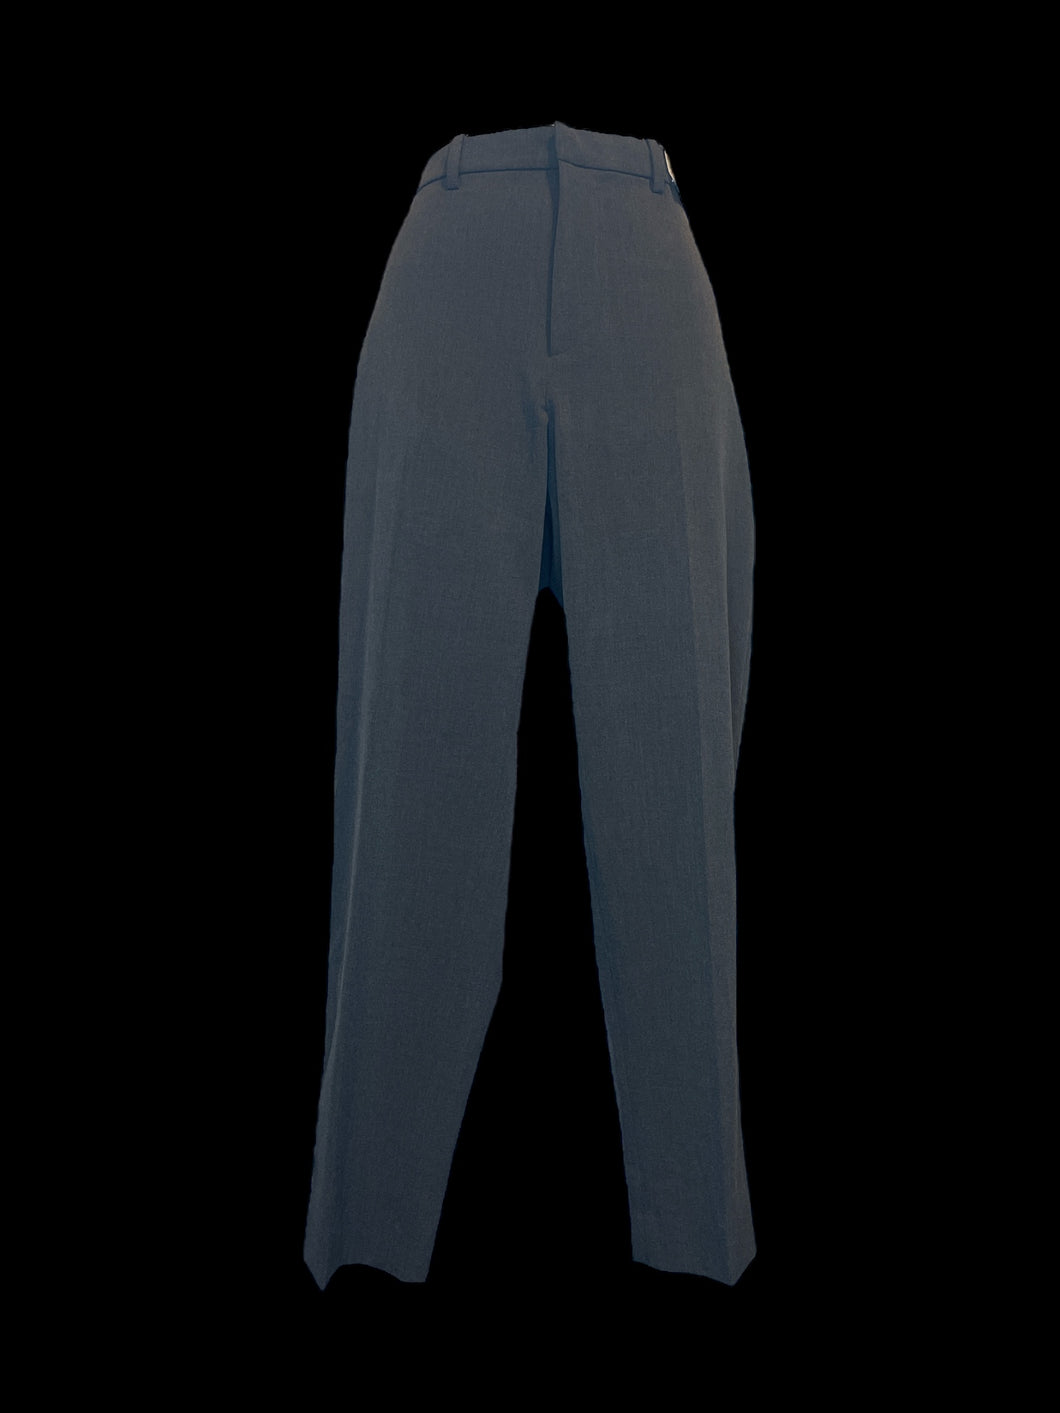 L NWT heathered grey dress pants w/ belt loops, pockets, back button pockets, & hidden clasp/zipper closure